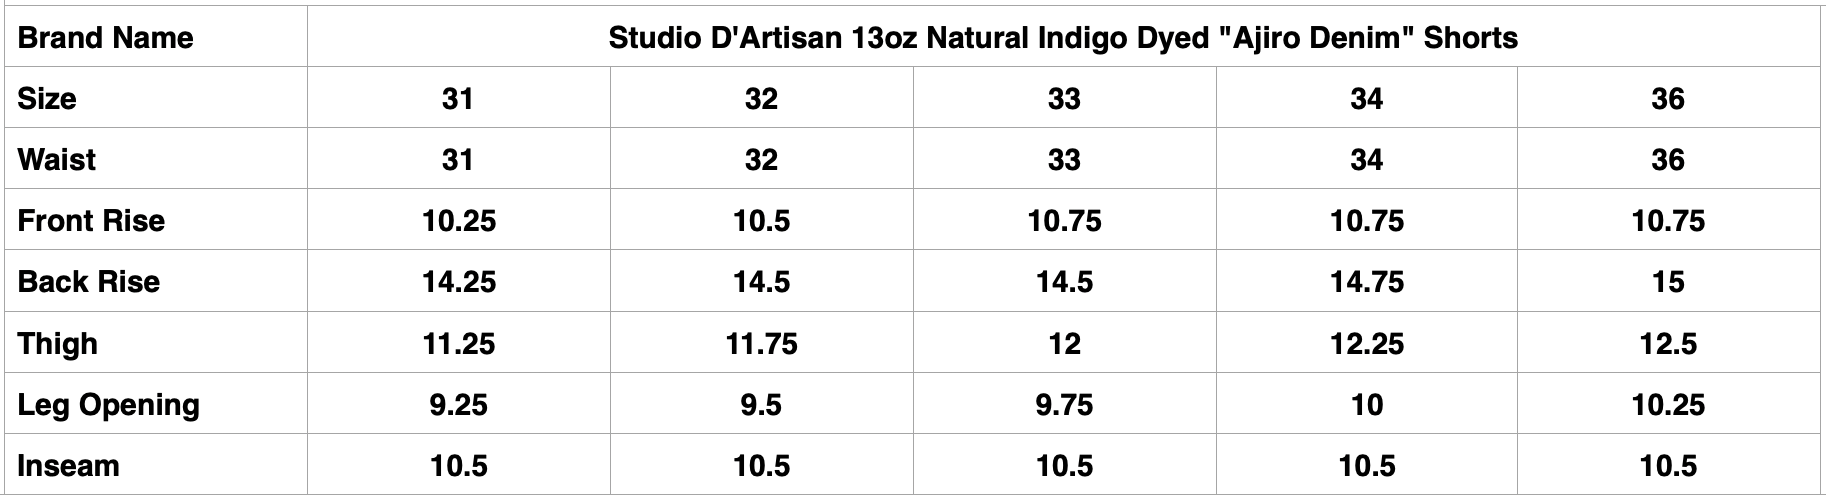 Studio D'Artisan 13oz Natural Indigo Dyed "Ajiro Denim" Shorts